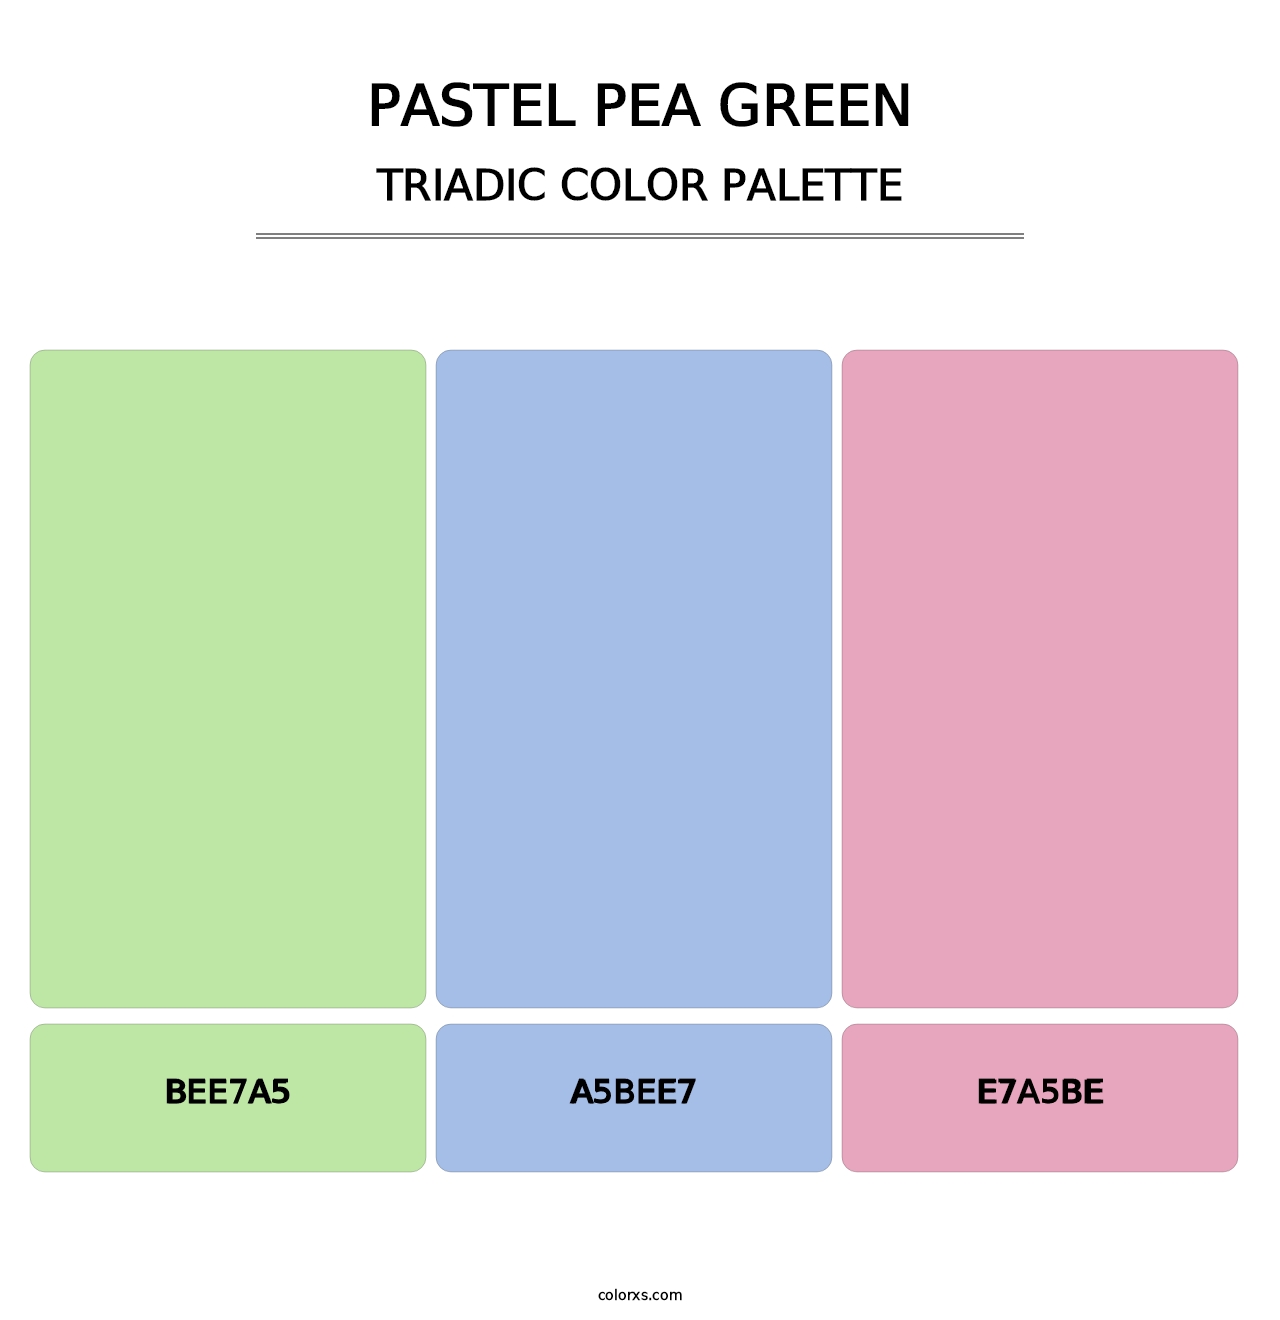 Pastel Pea Green - Triadic Color Palette